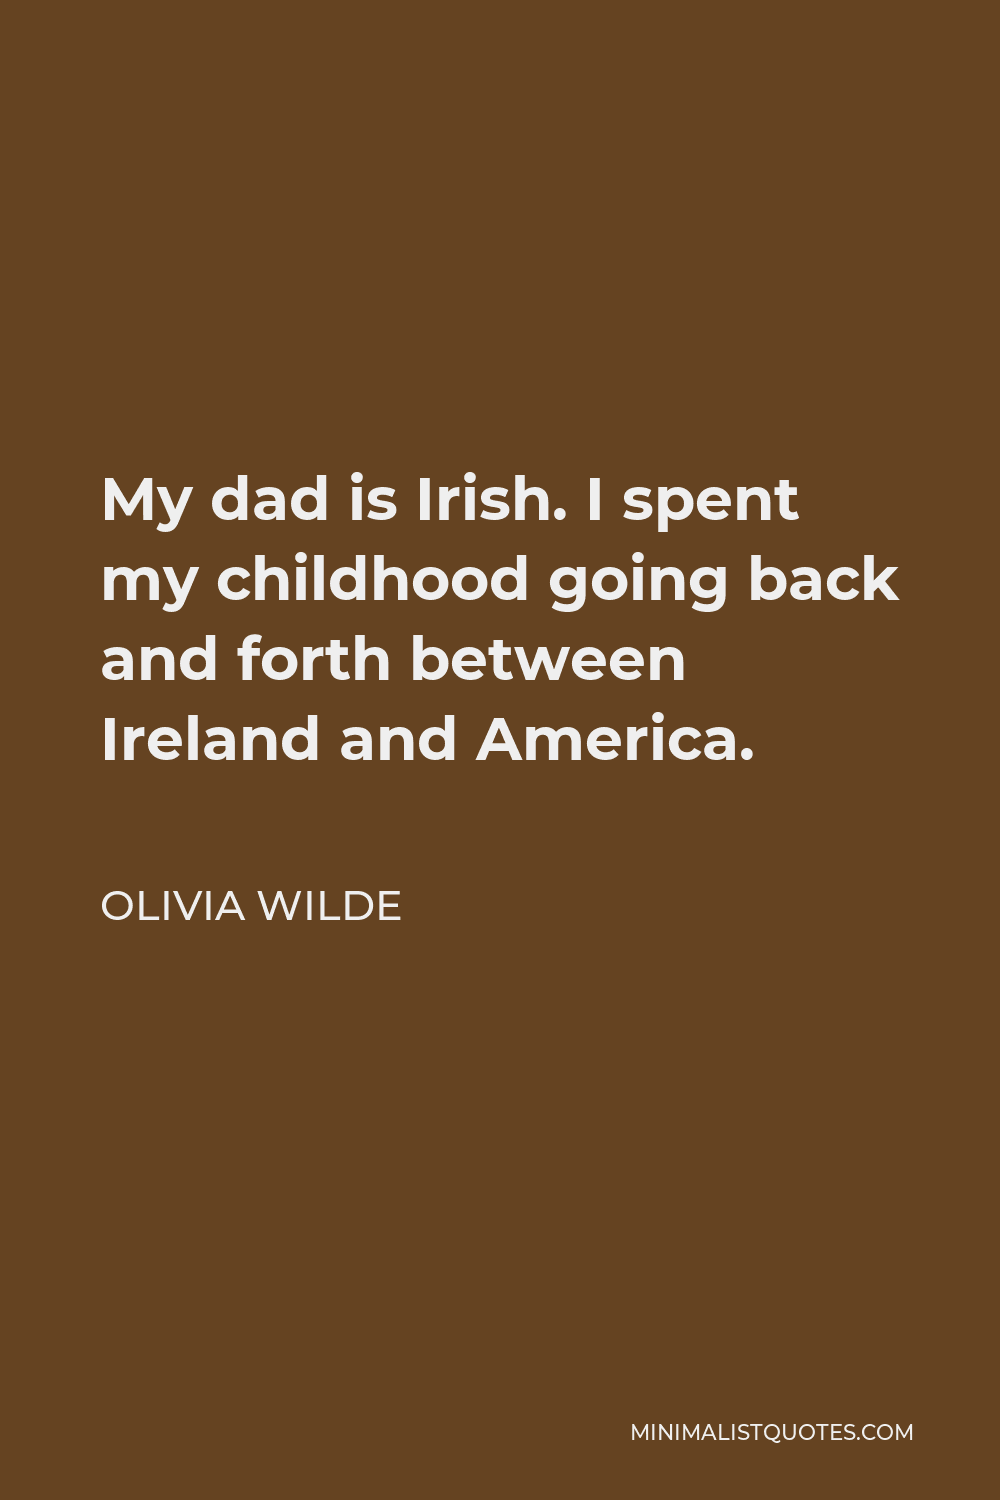 Olivia Wilde Quote My dad is Irish. I spent my childhood going back